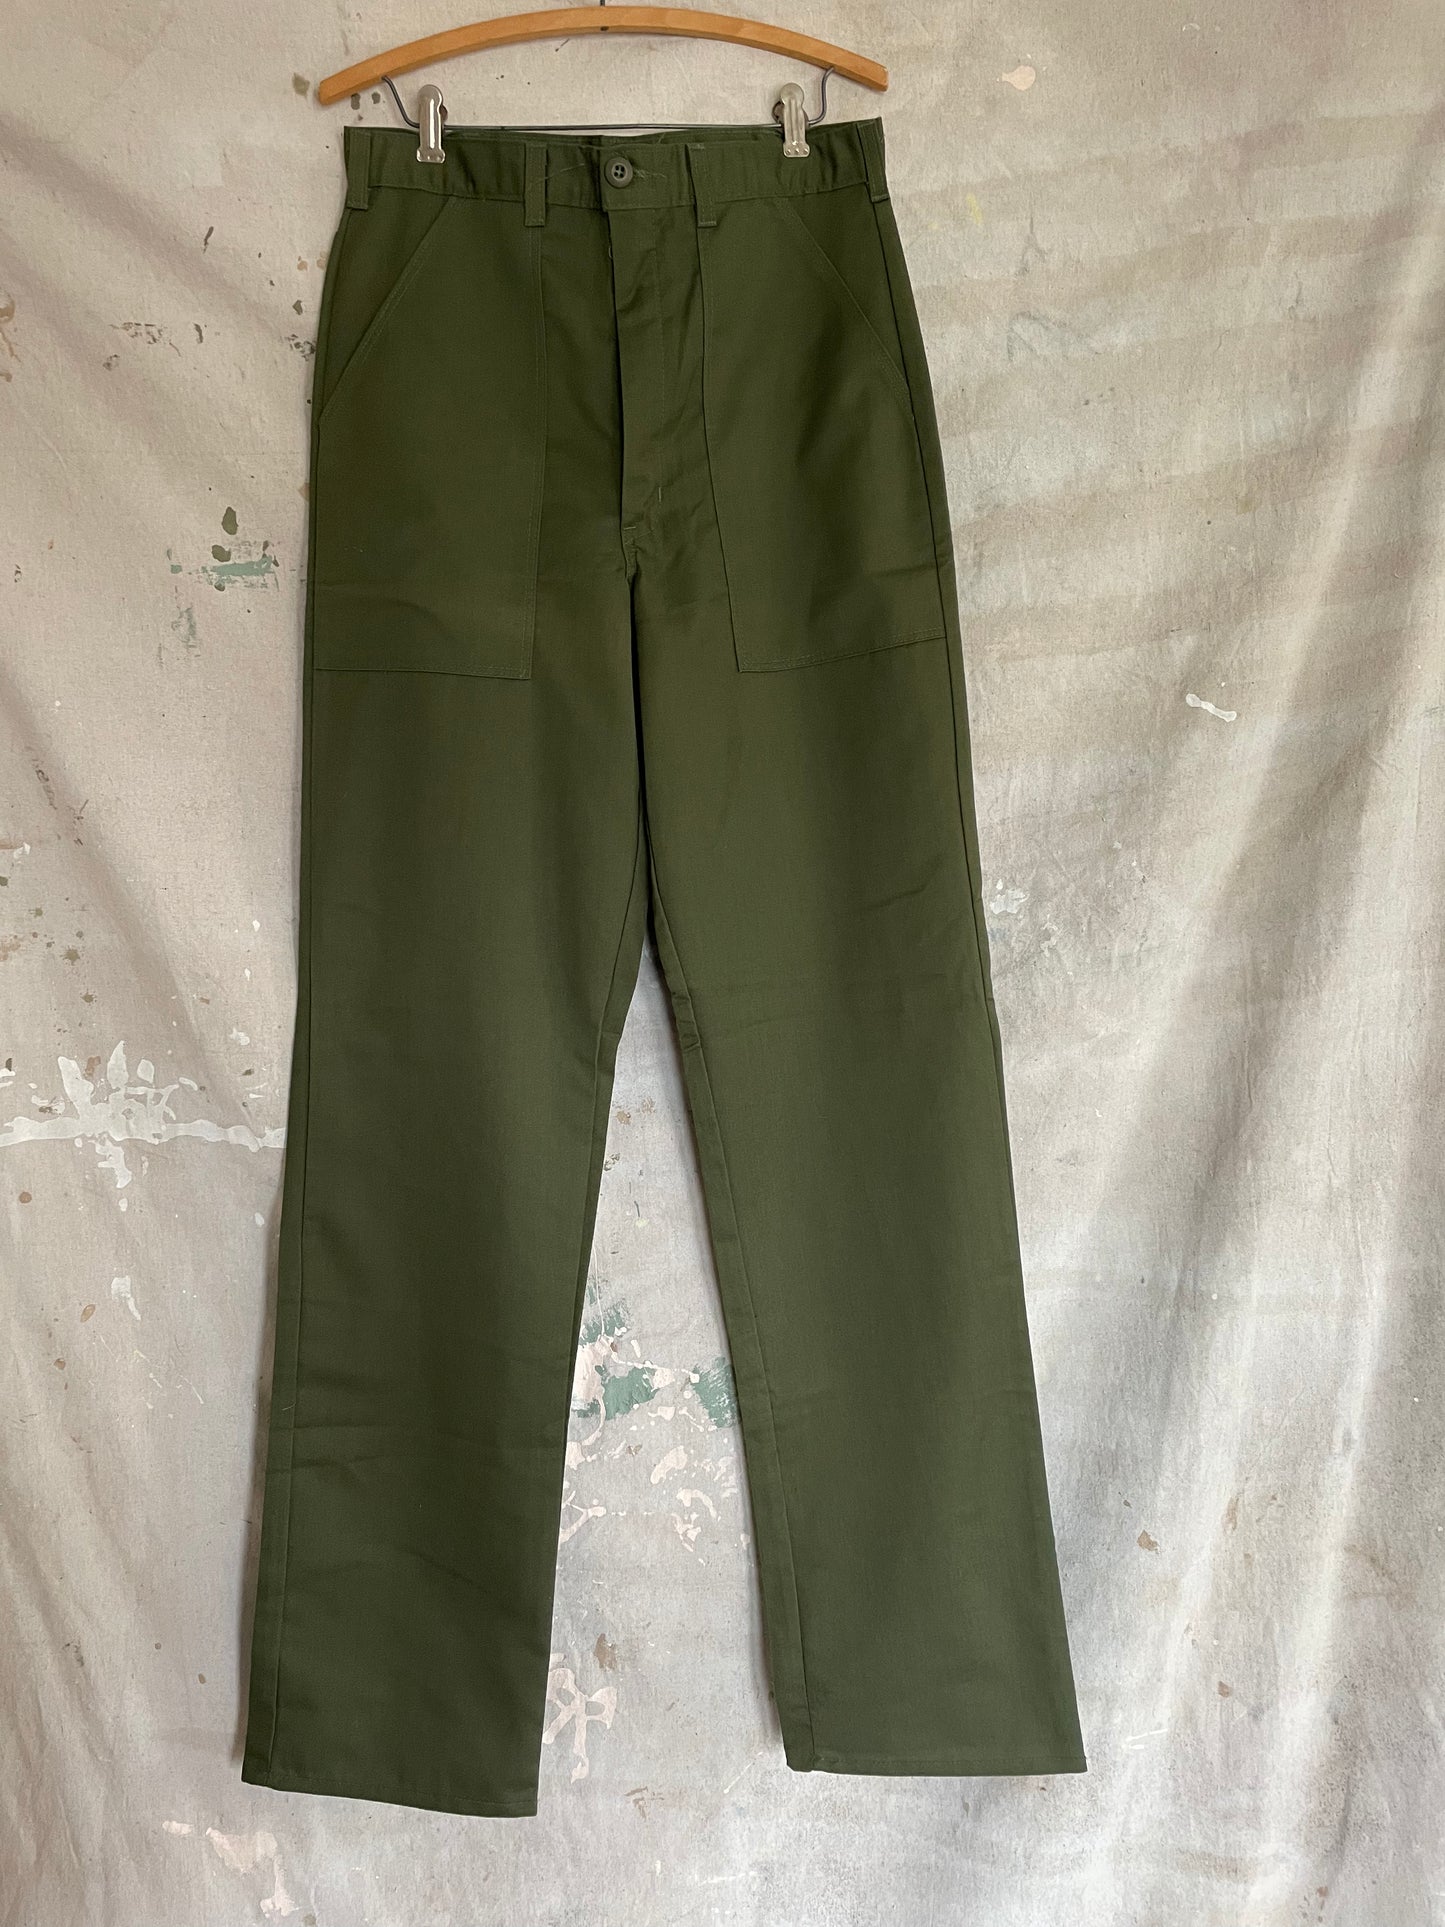 70s Army Fatigue Pants